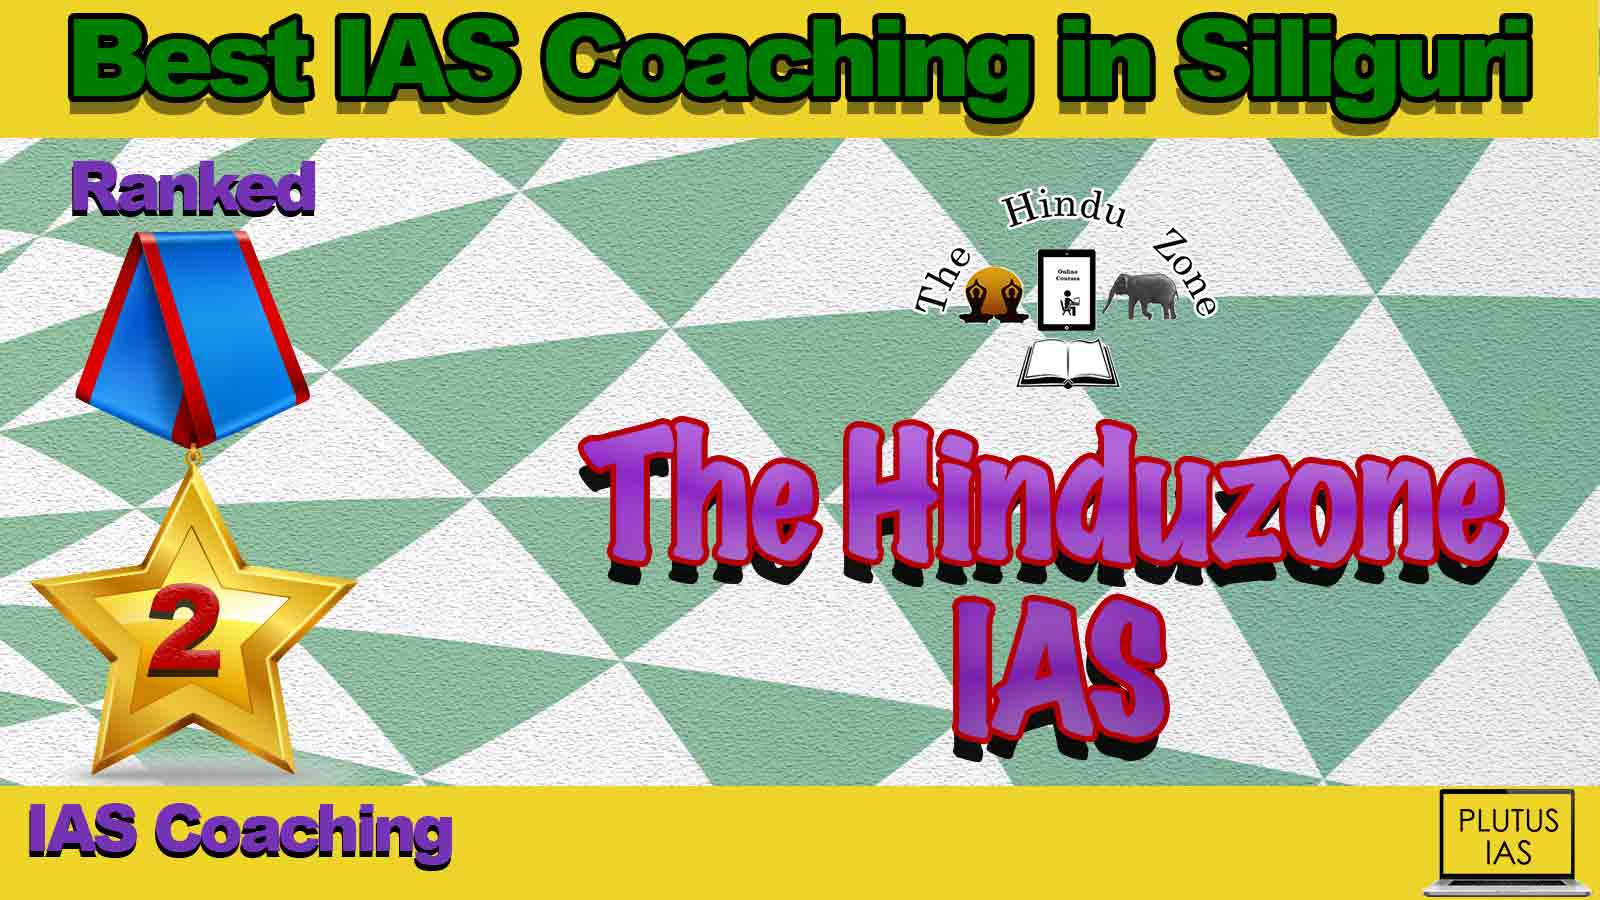 Best IAS Coaching in Siliguri